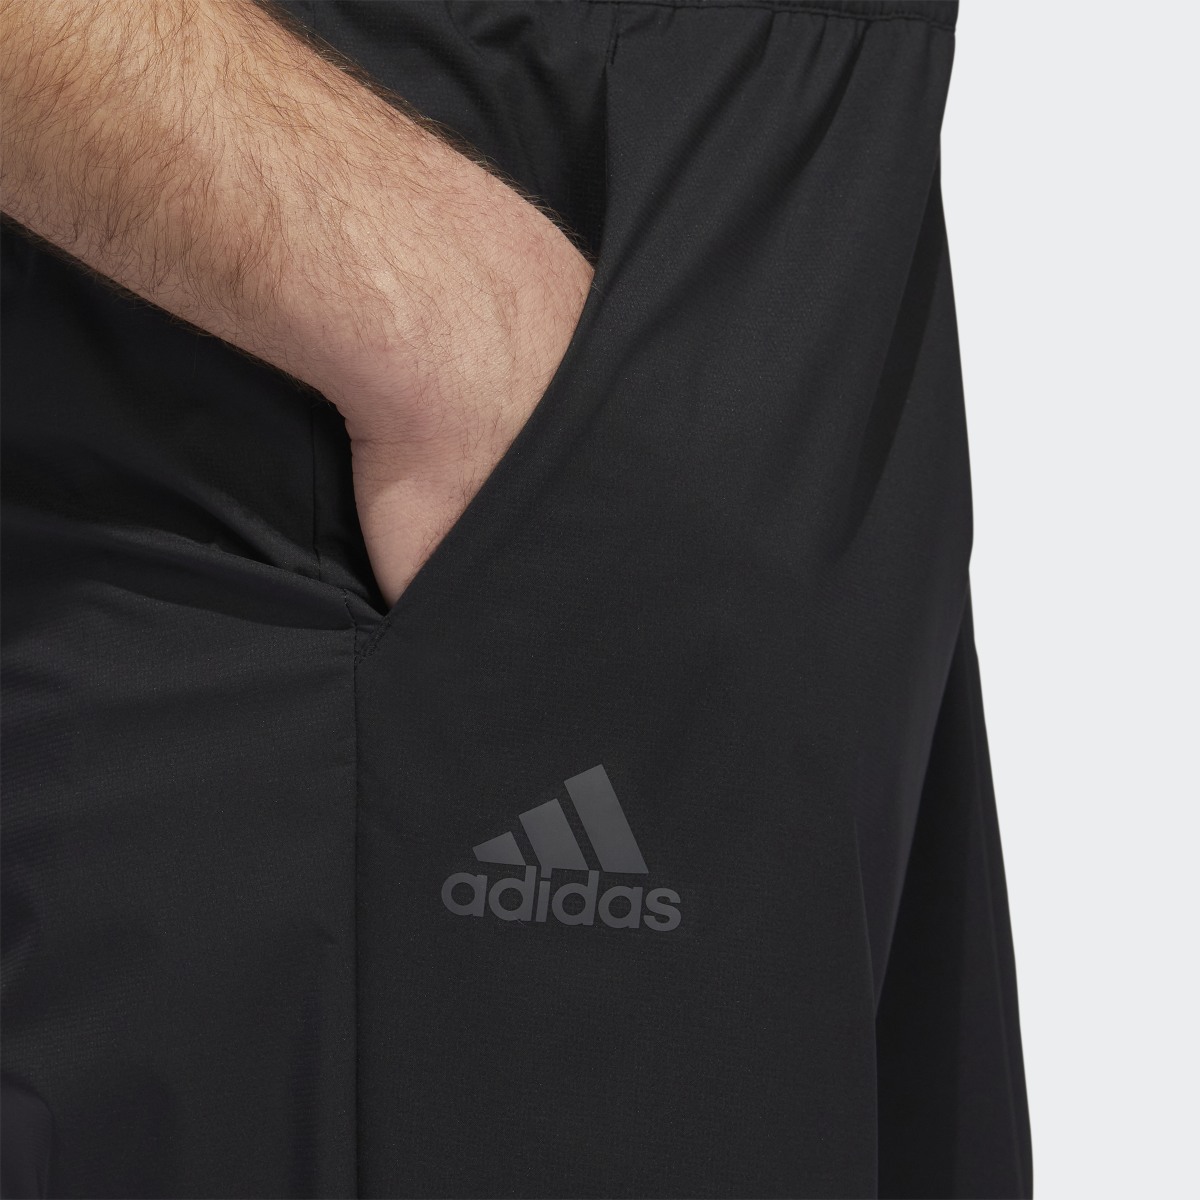 Adidas Provisional Golf Pants. 6